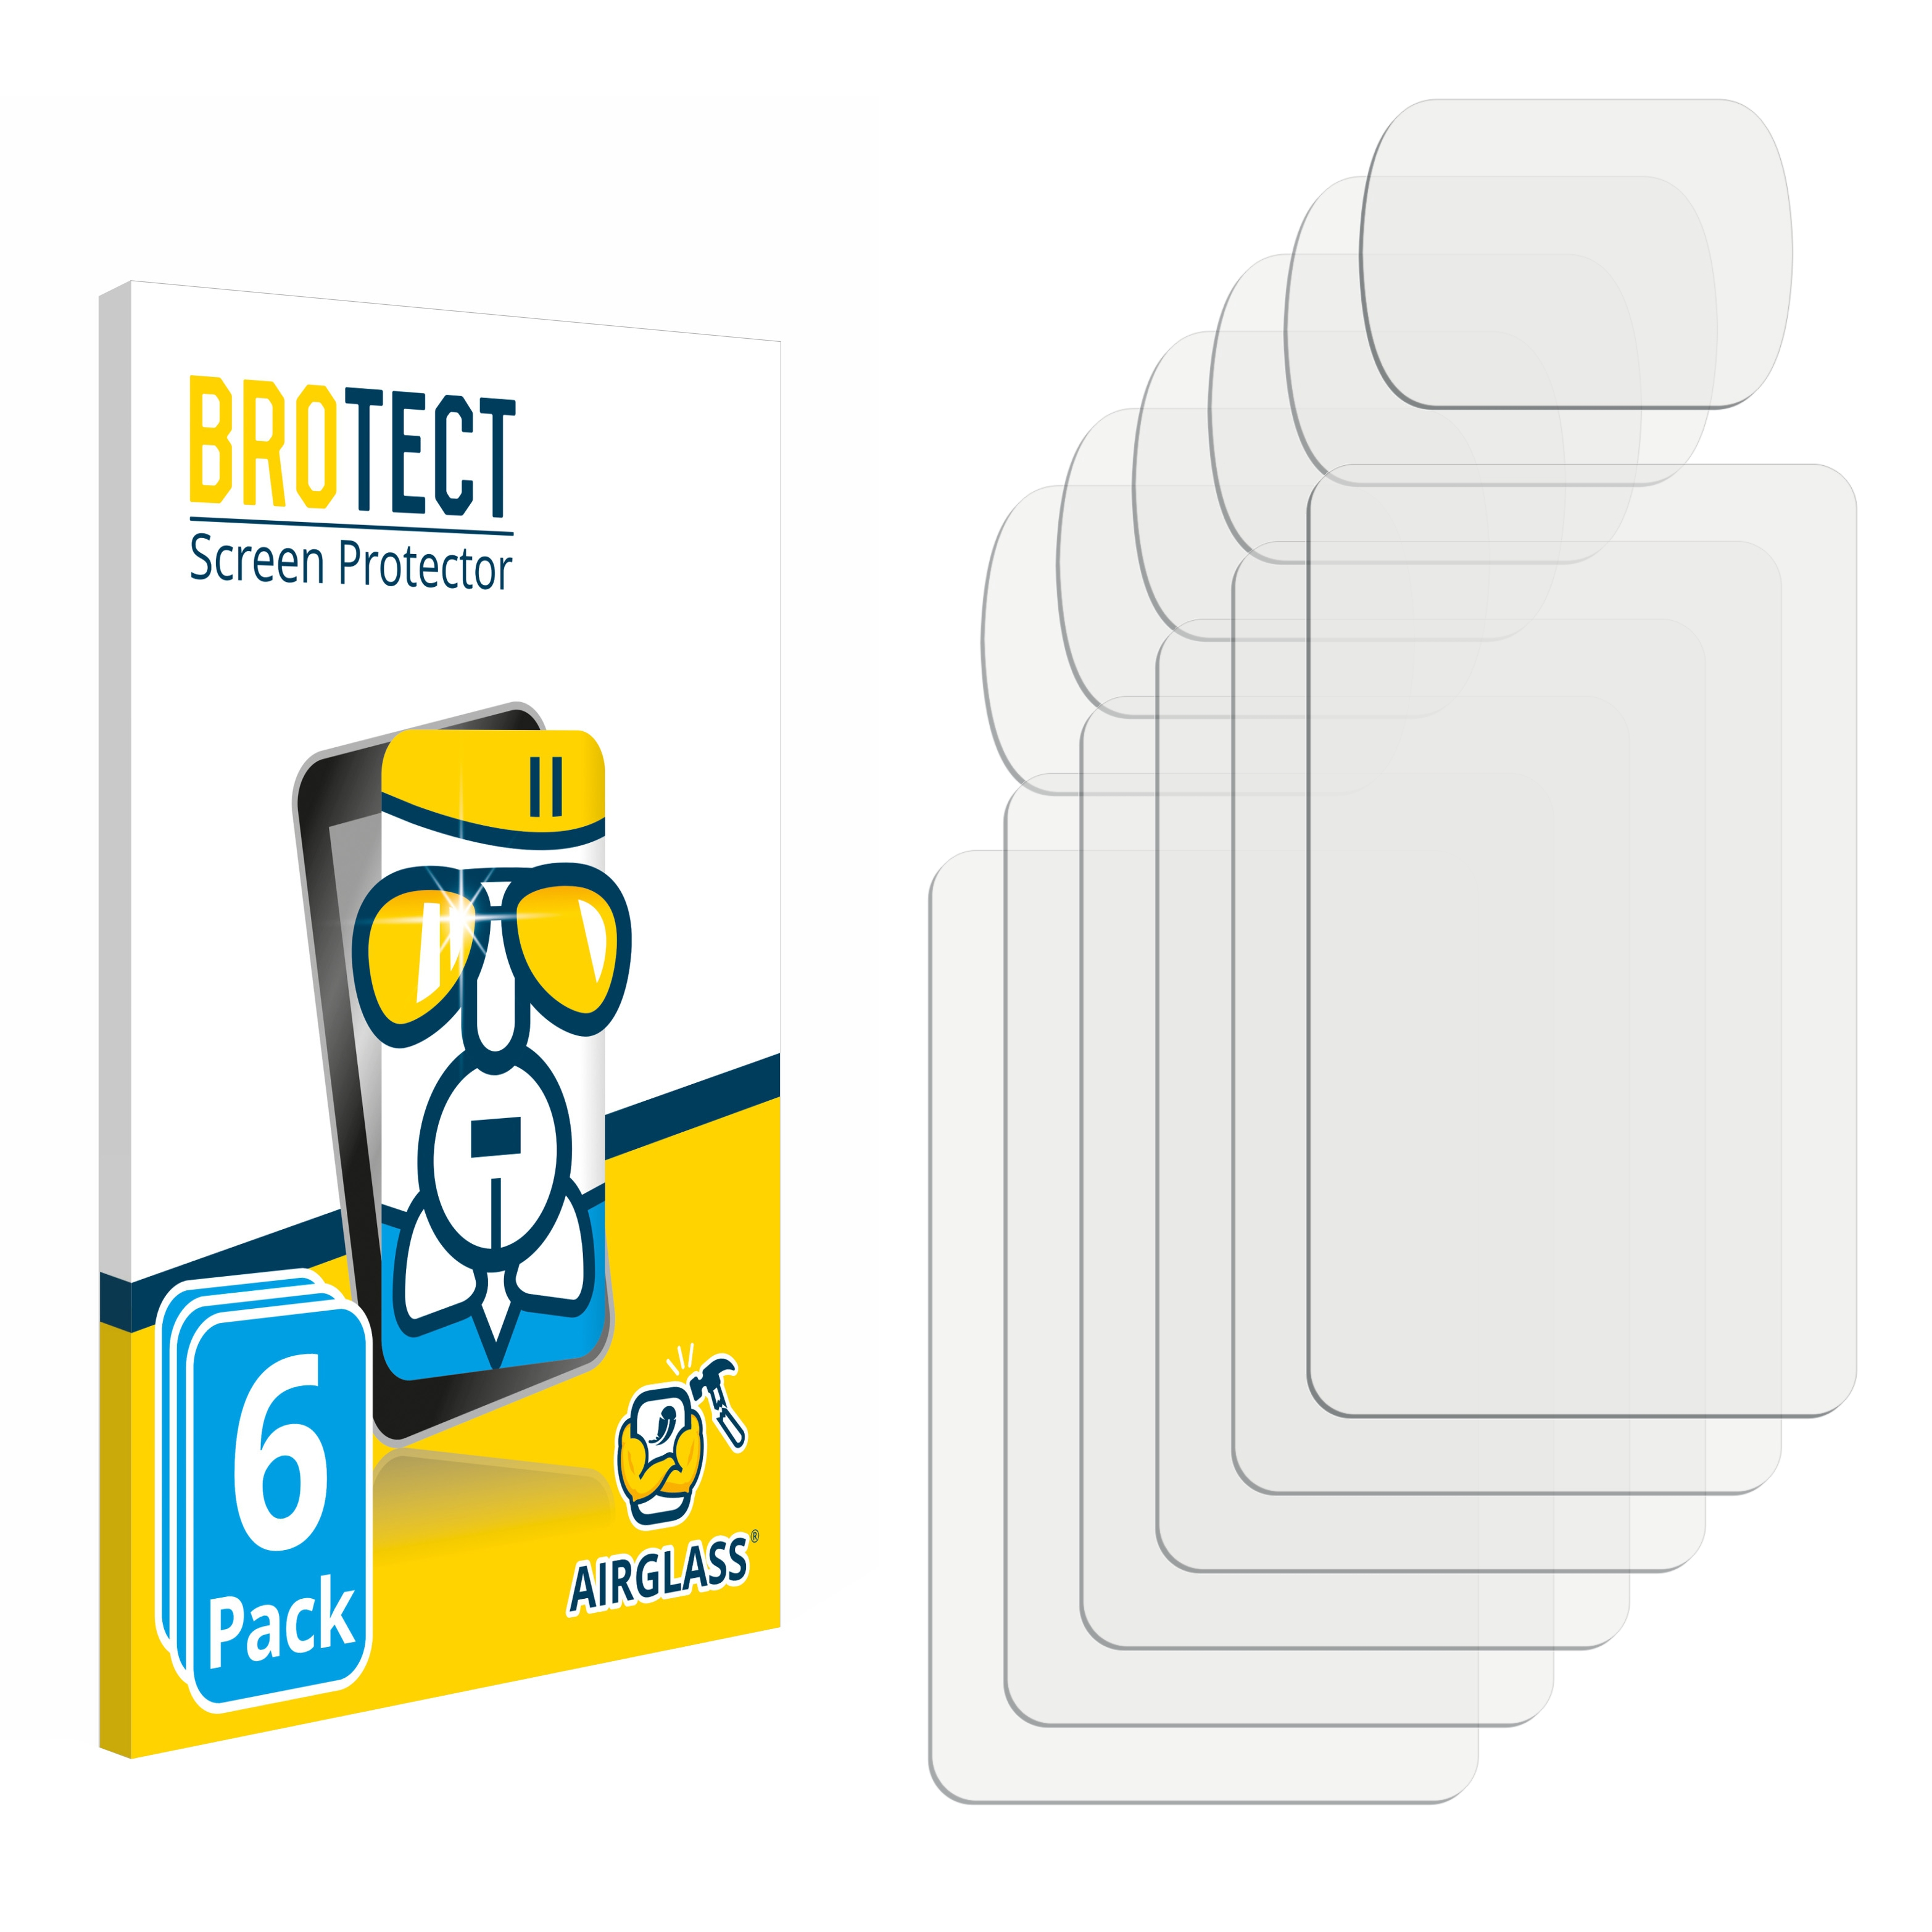 Pocket Airglass DJI Schutzfolie(für BROTECT Osmo klare 3) 6x